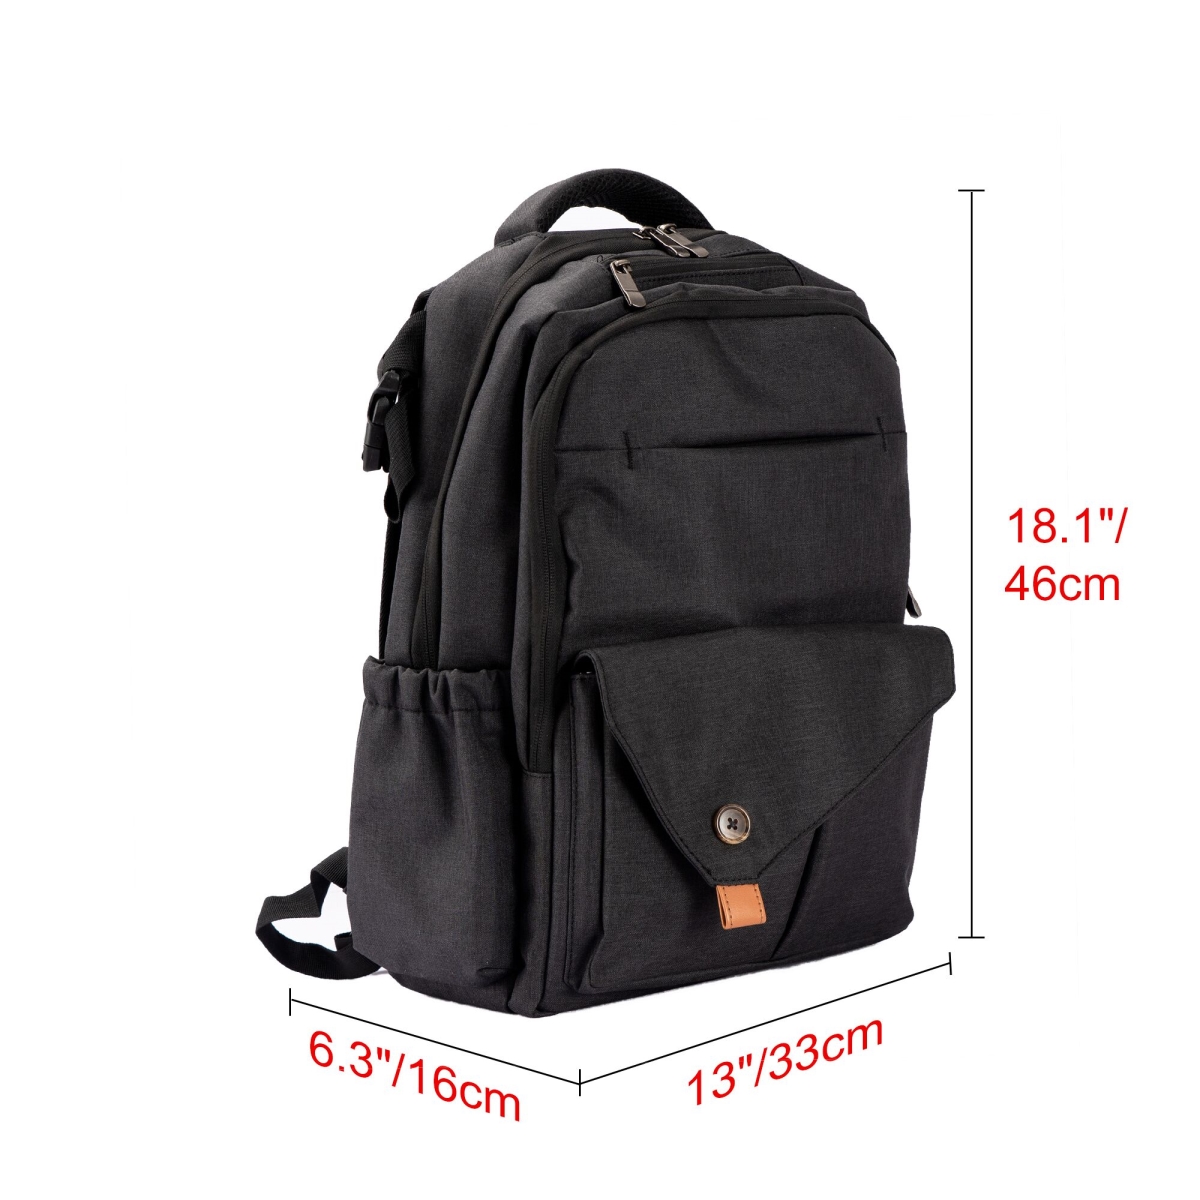 Dp3bk Baby Diaper Bag, Waterproof With Changing Mat, Pockets & Stroller Straps - Black